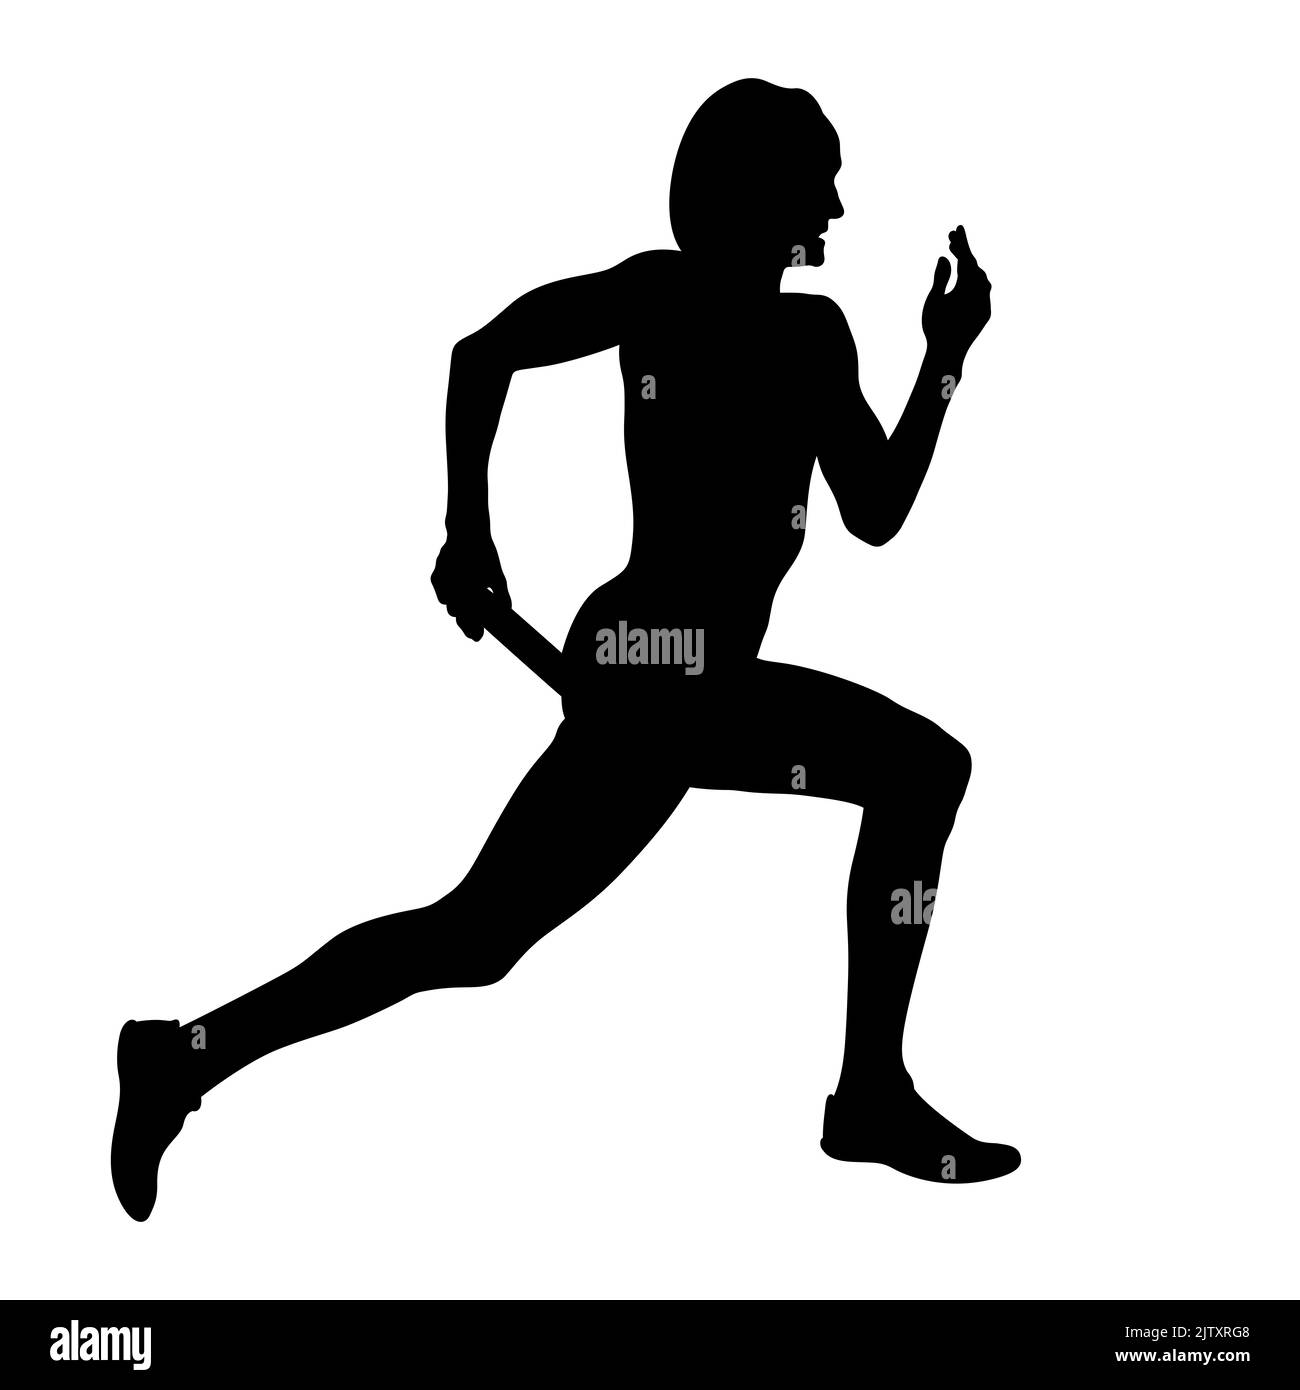 female runner running relay baton black silhouette Stock Photo